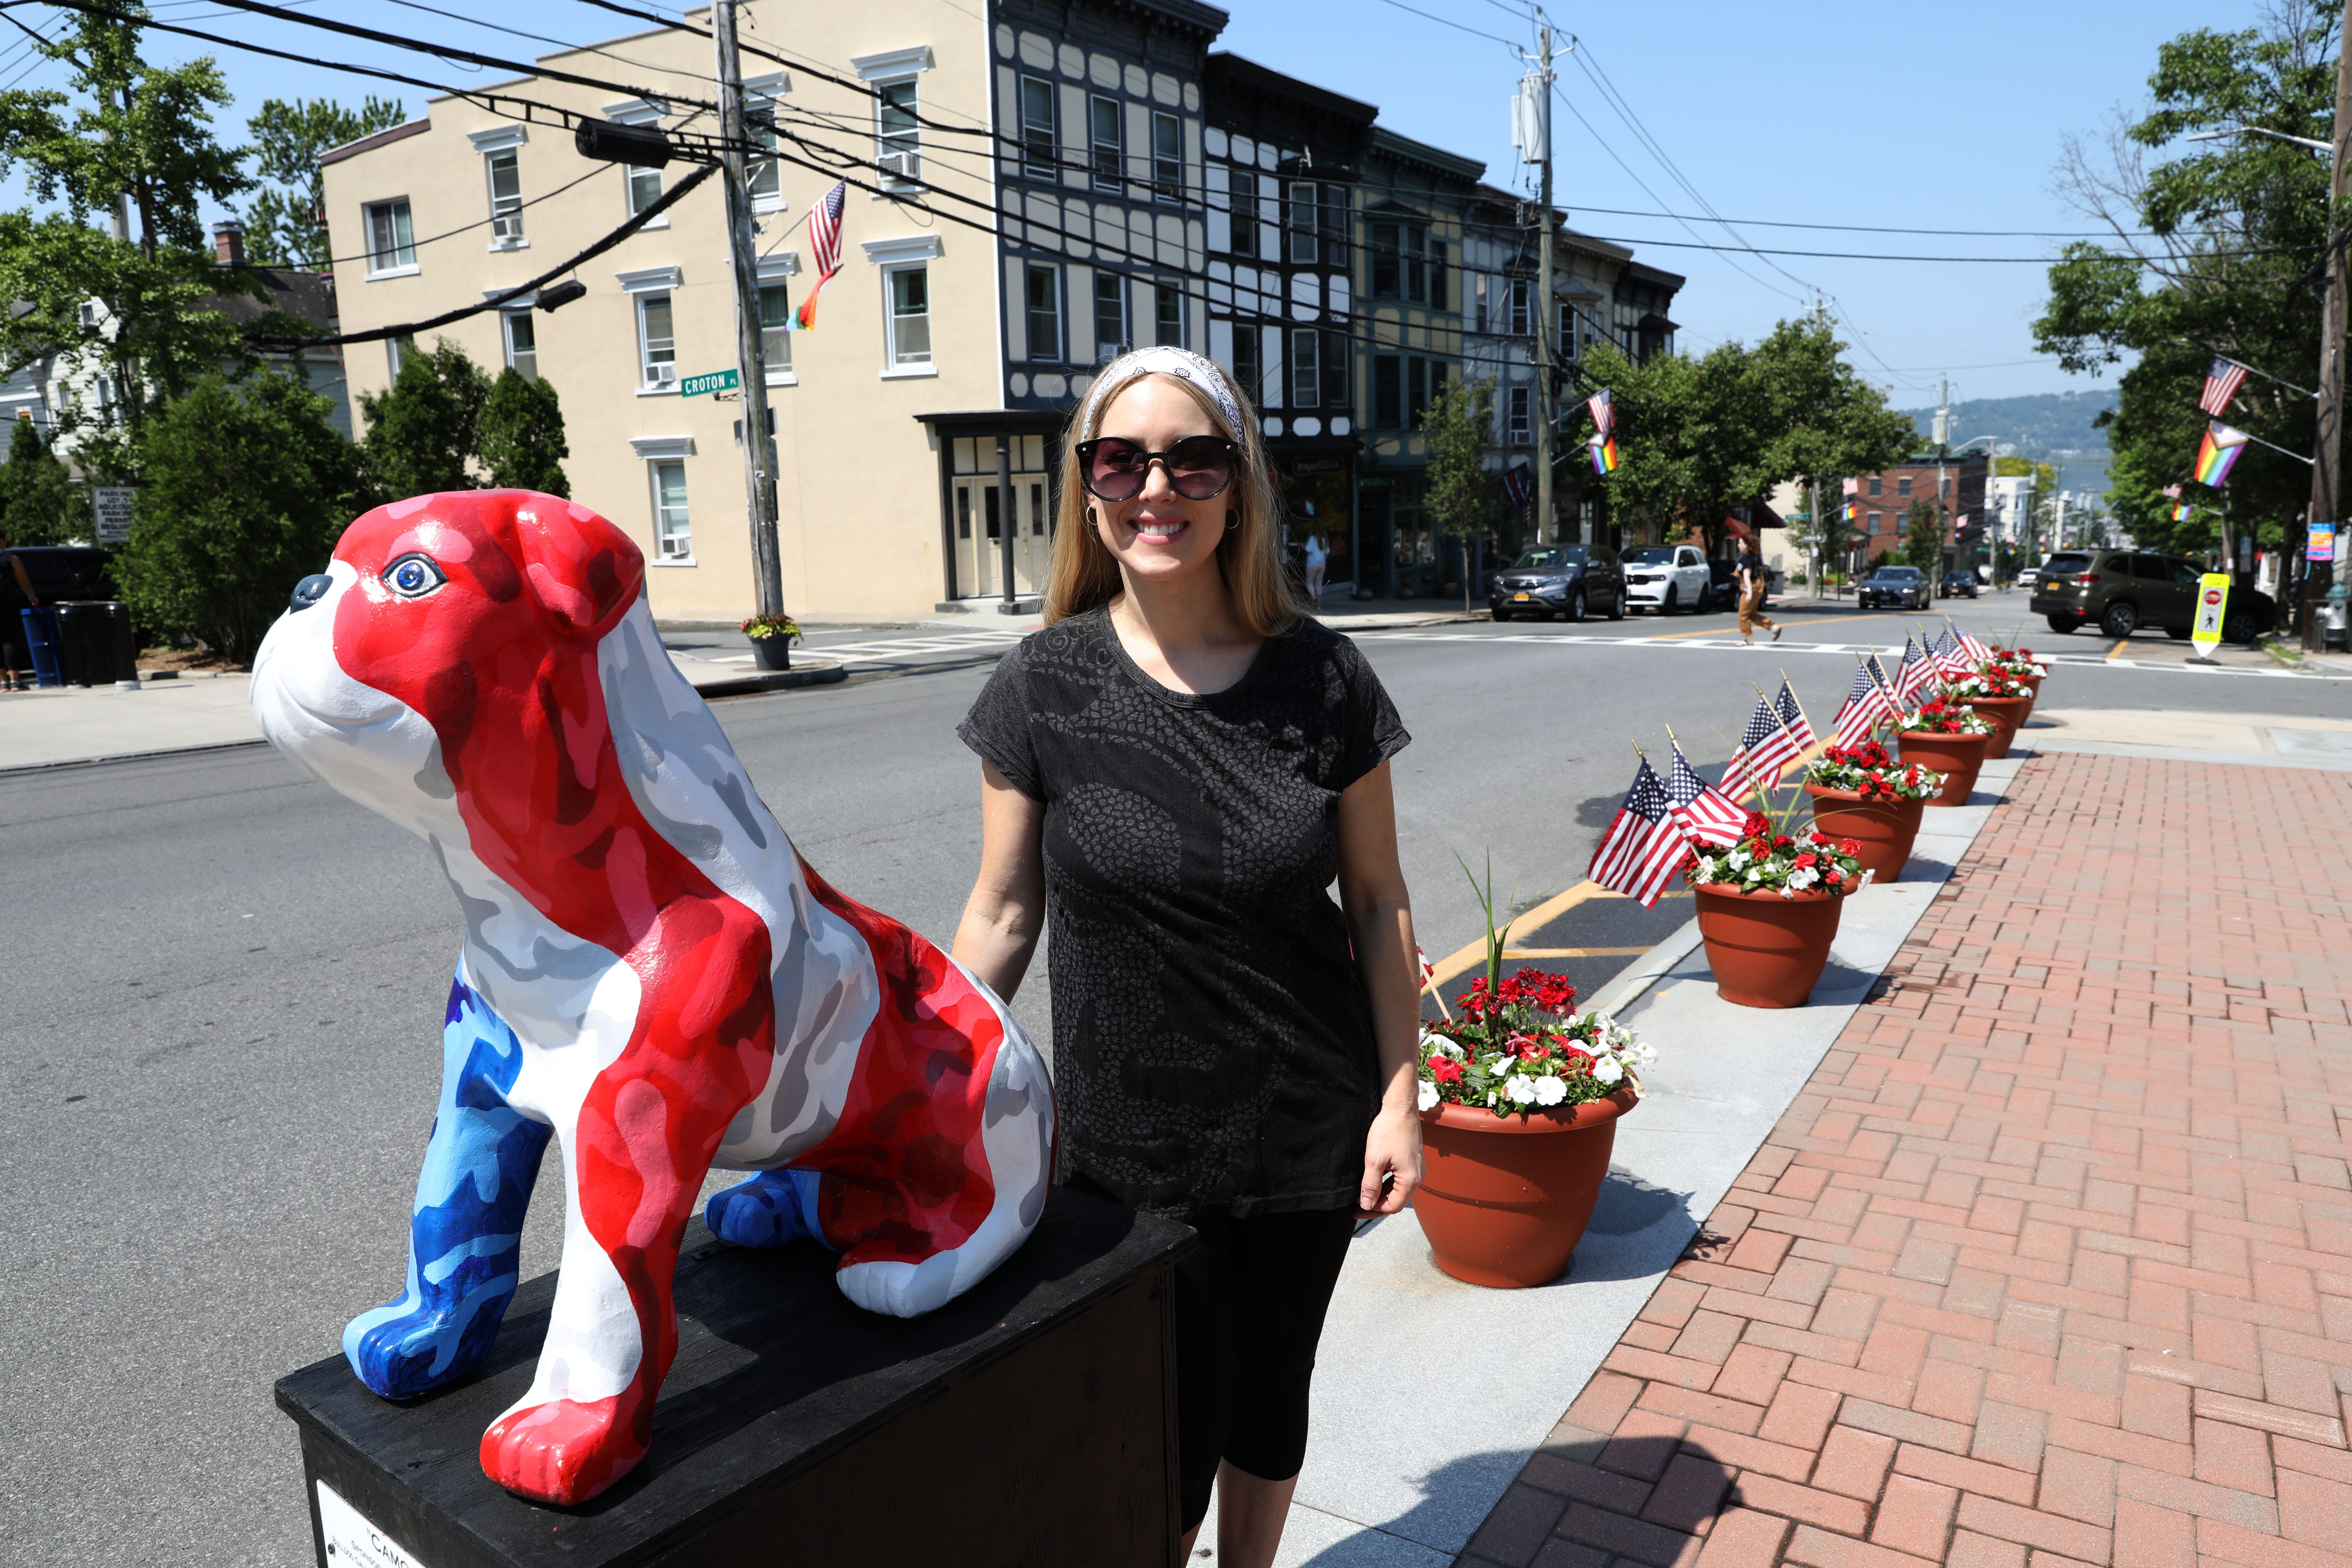 Bulldog sculptures return, Insta-ready, to Irvington's Main Street